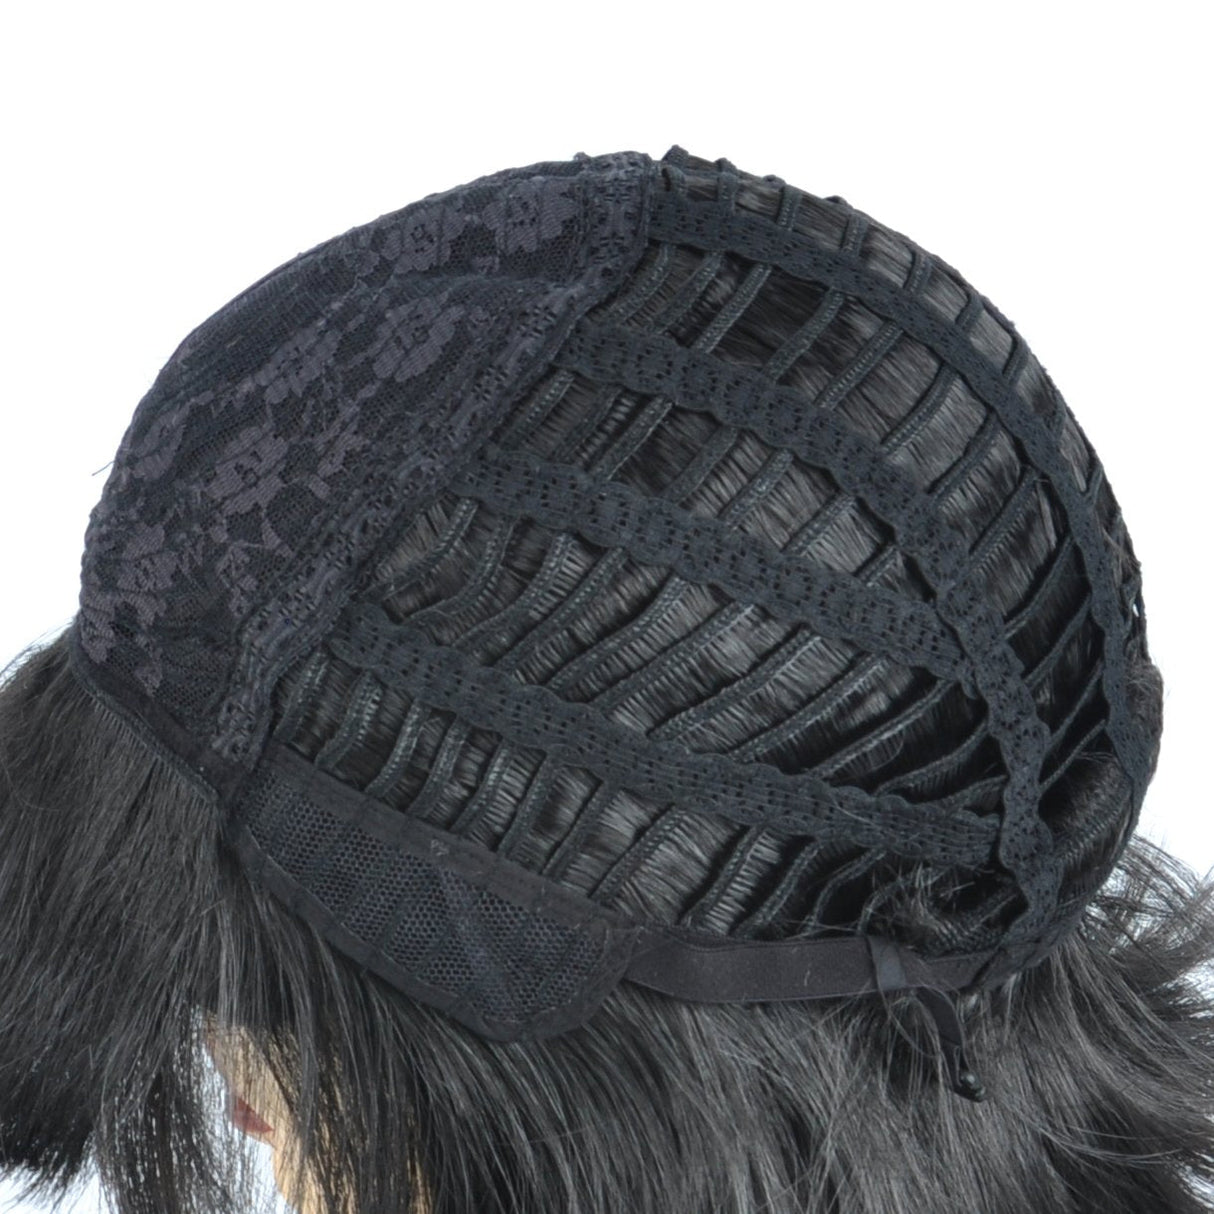 GEXWORLDWIDE Black Bob Short Wig Straight with Bangs for Women Girls Synthetic Fiber 12" - GexWorldwide